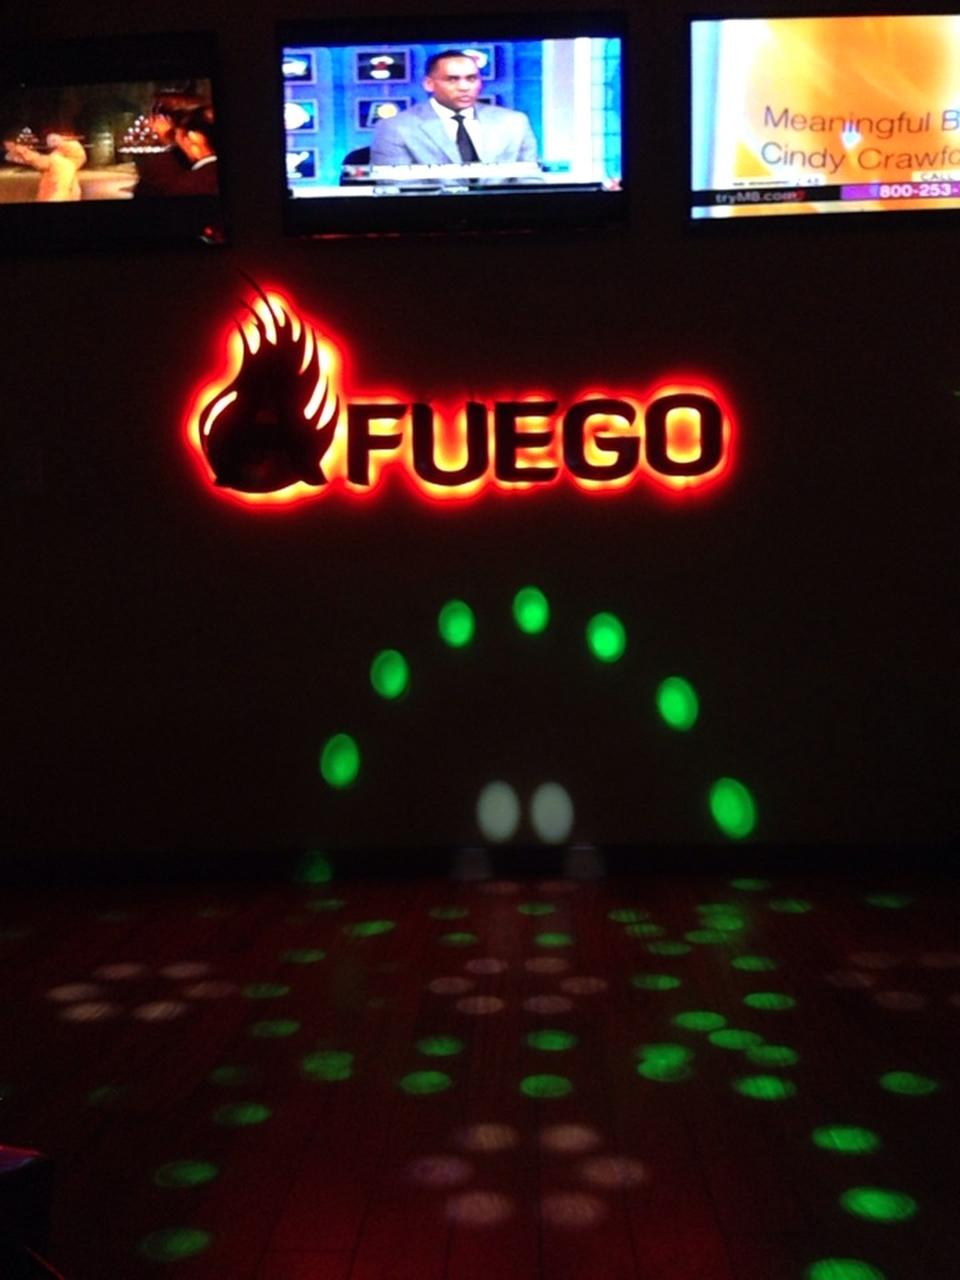 AFuego Restaurant